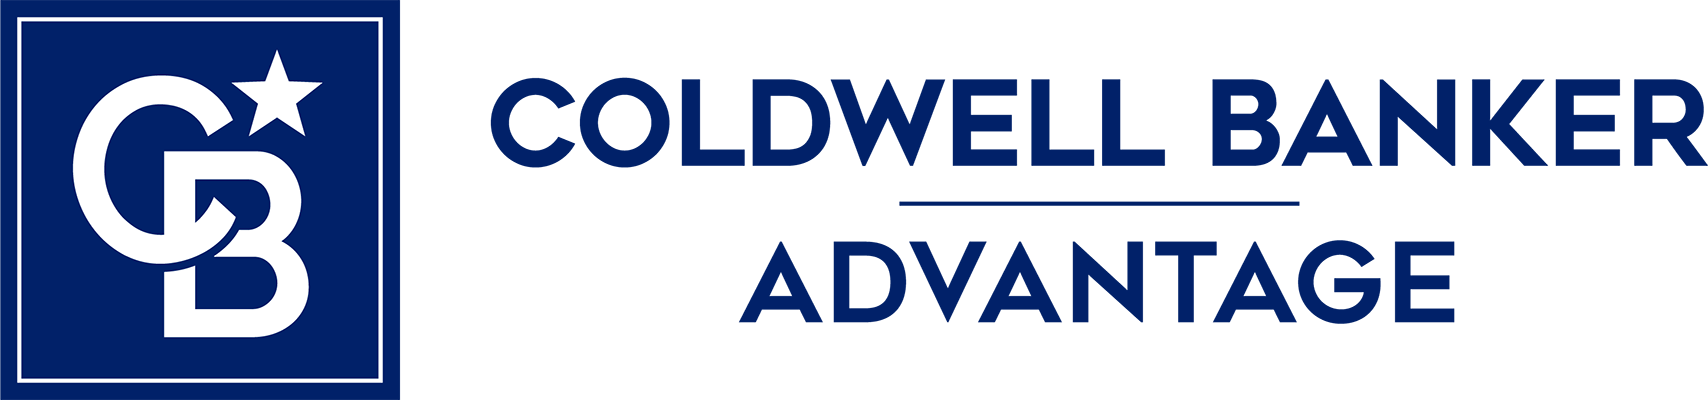 Michelle Lawson - Coldwell Banker Advantage Logo